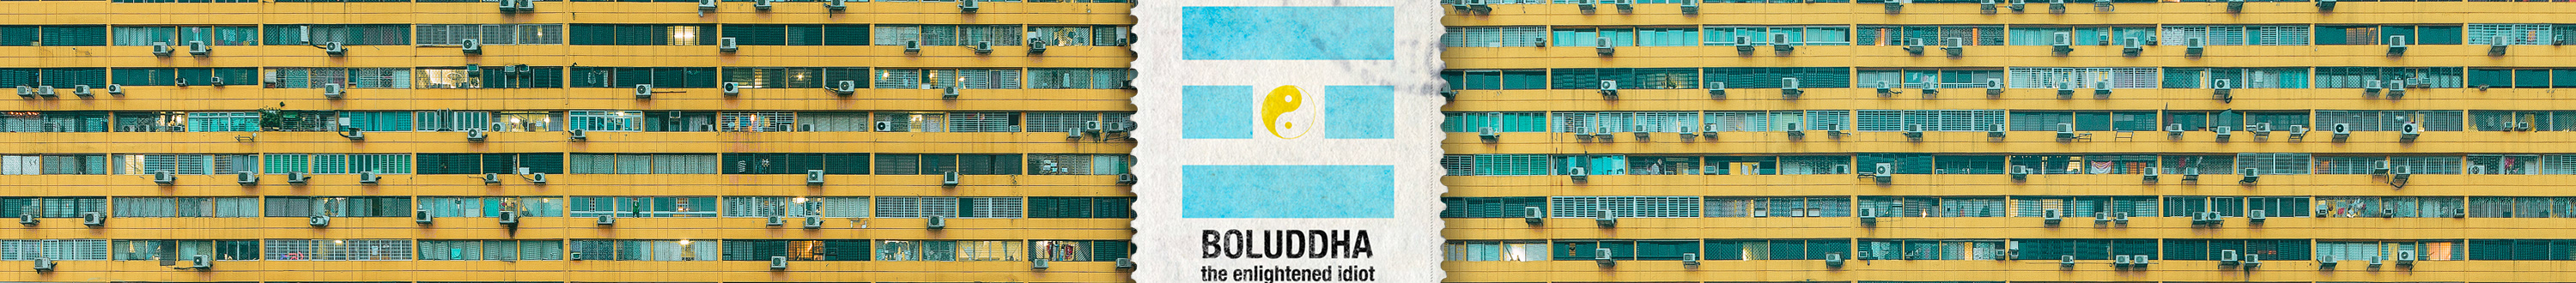 Boluddha - The Enlightened Idiots profilbanner